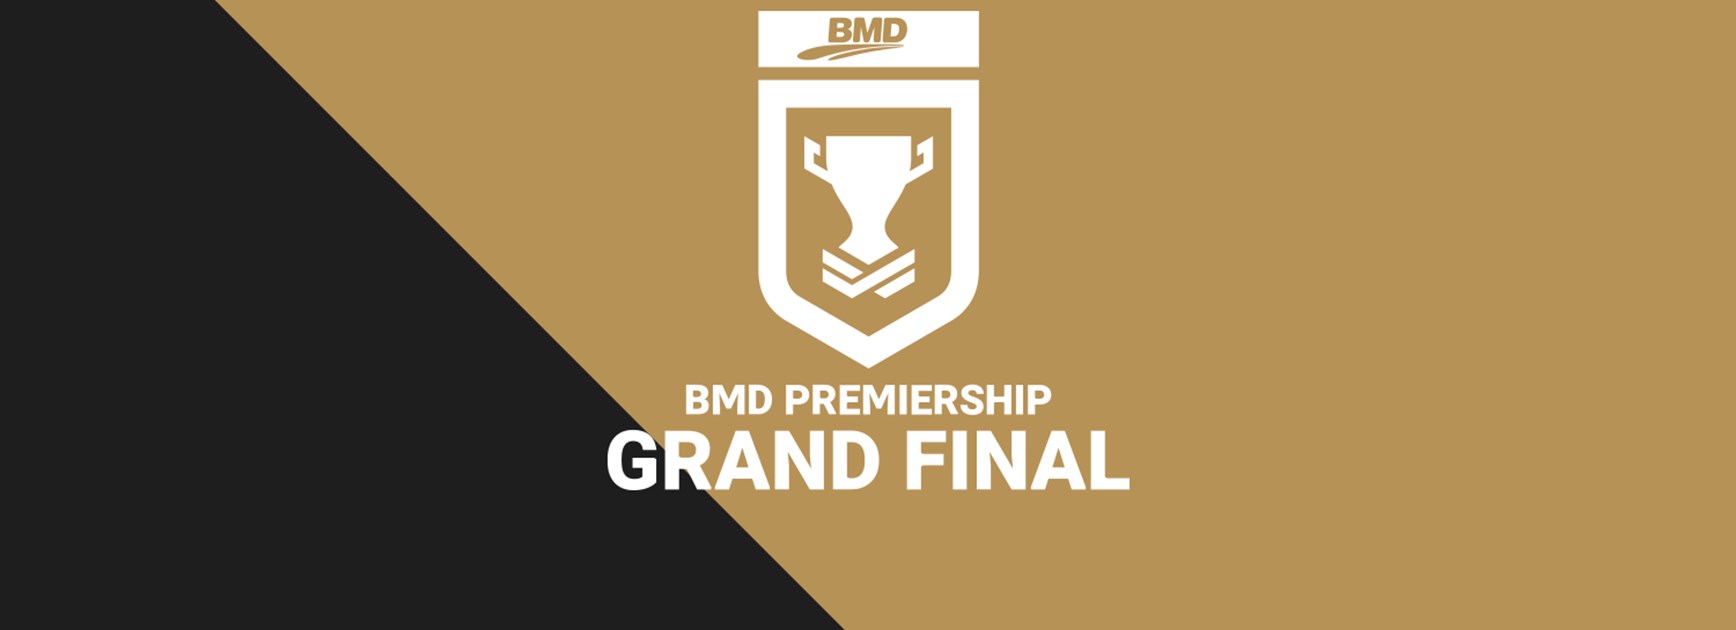 BMD Premiership grand final team lists